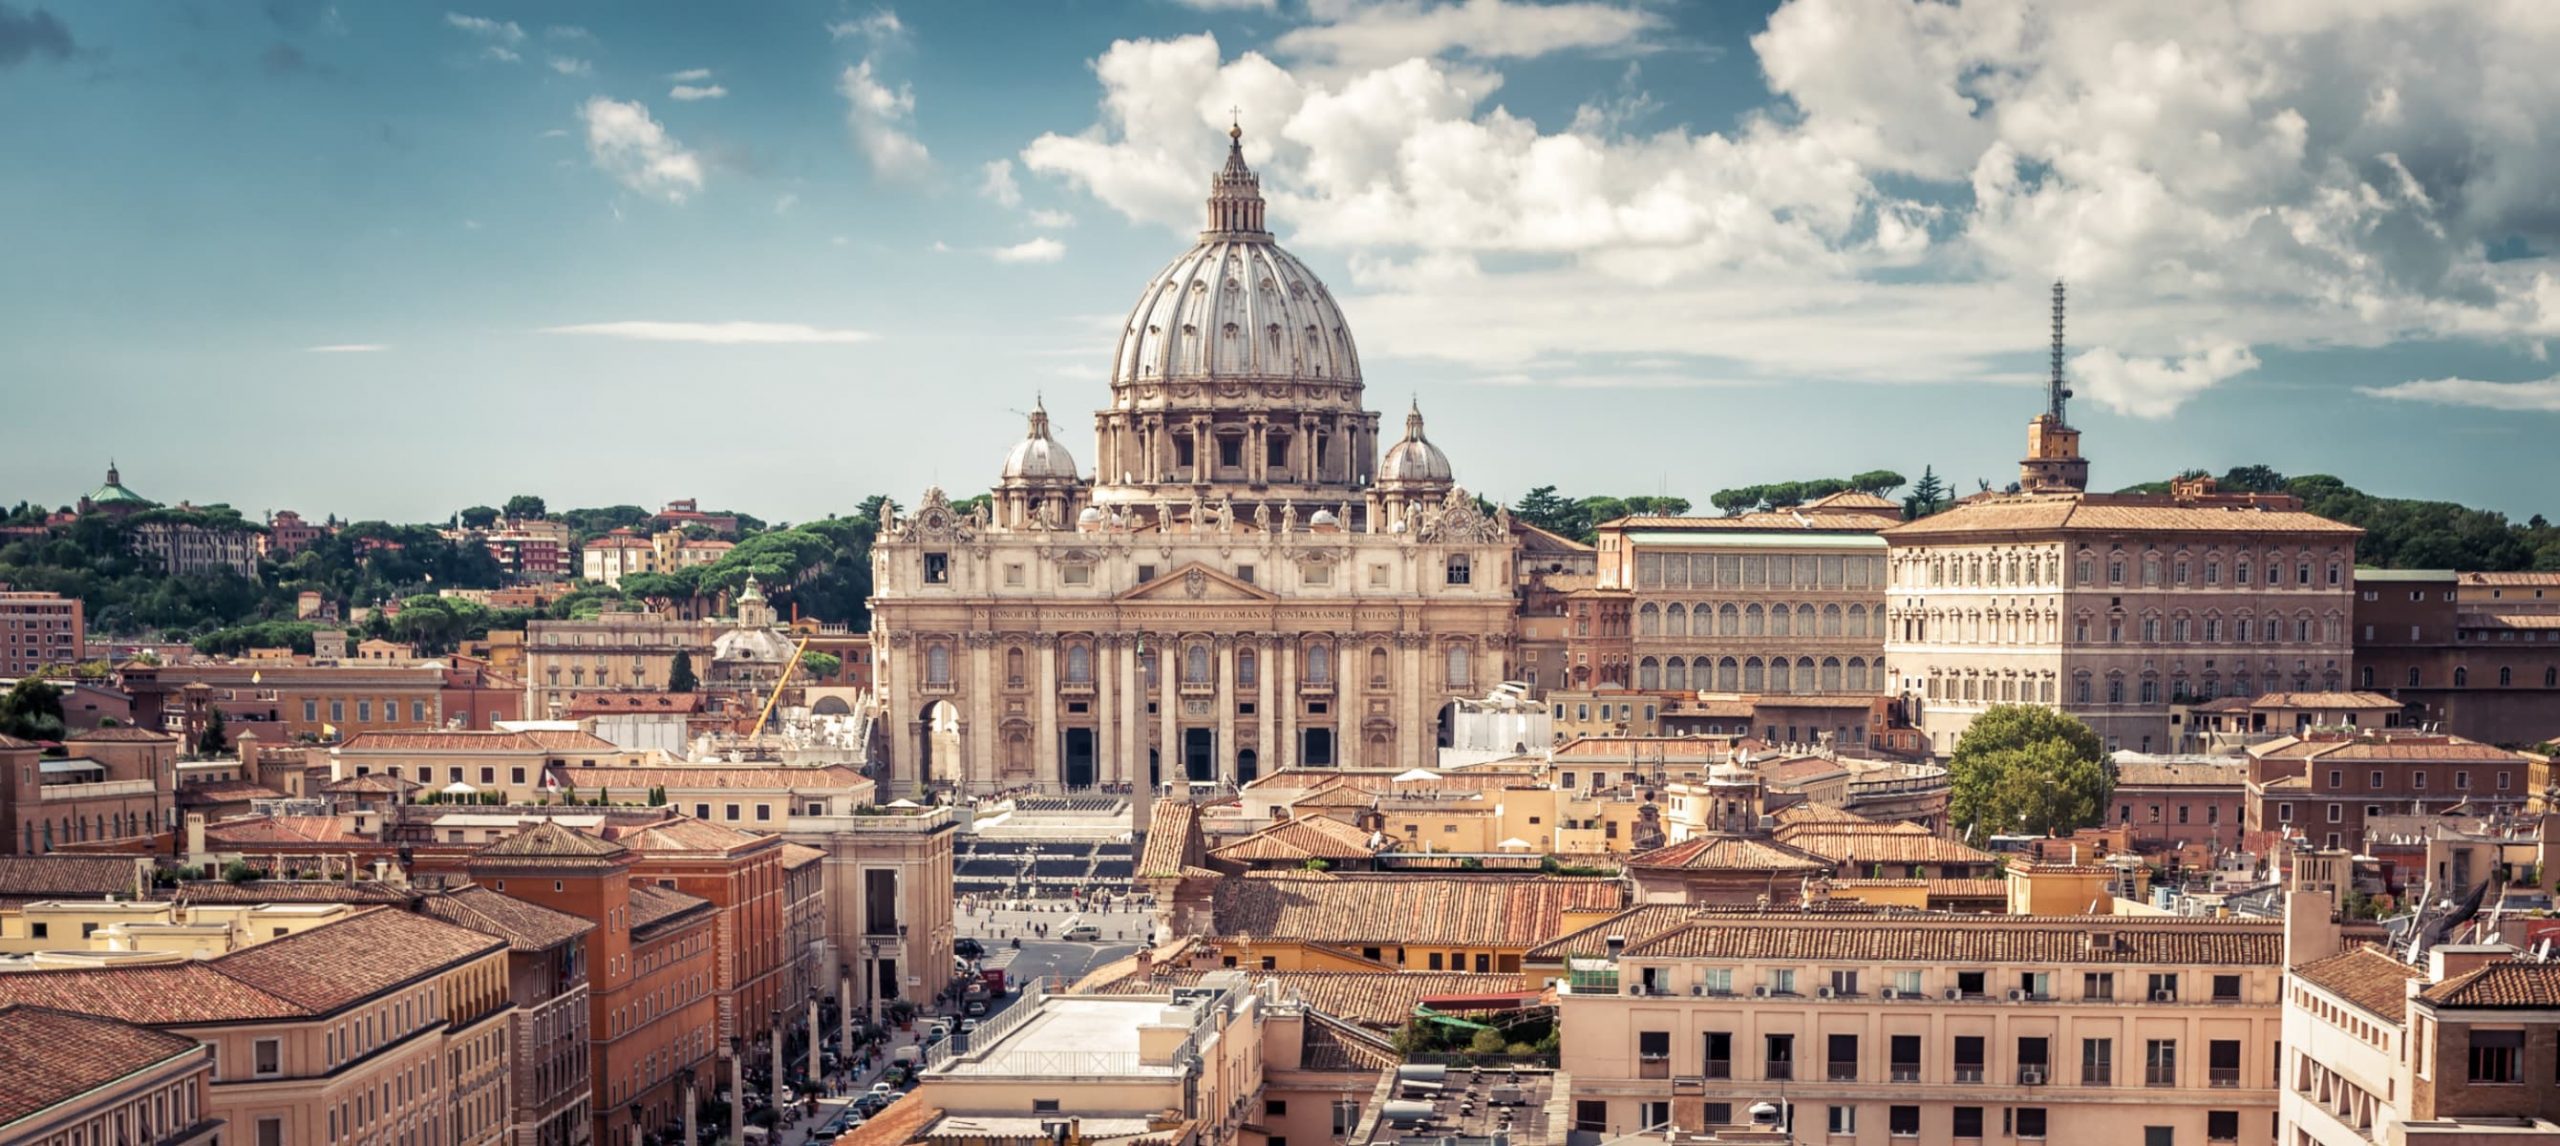 Vatican City, in Rome, Italy.